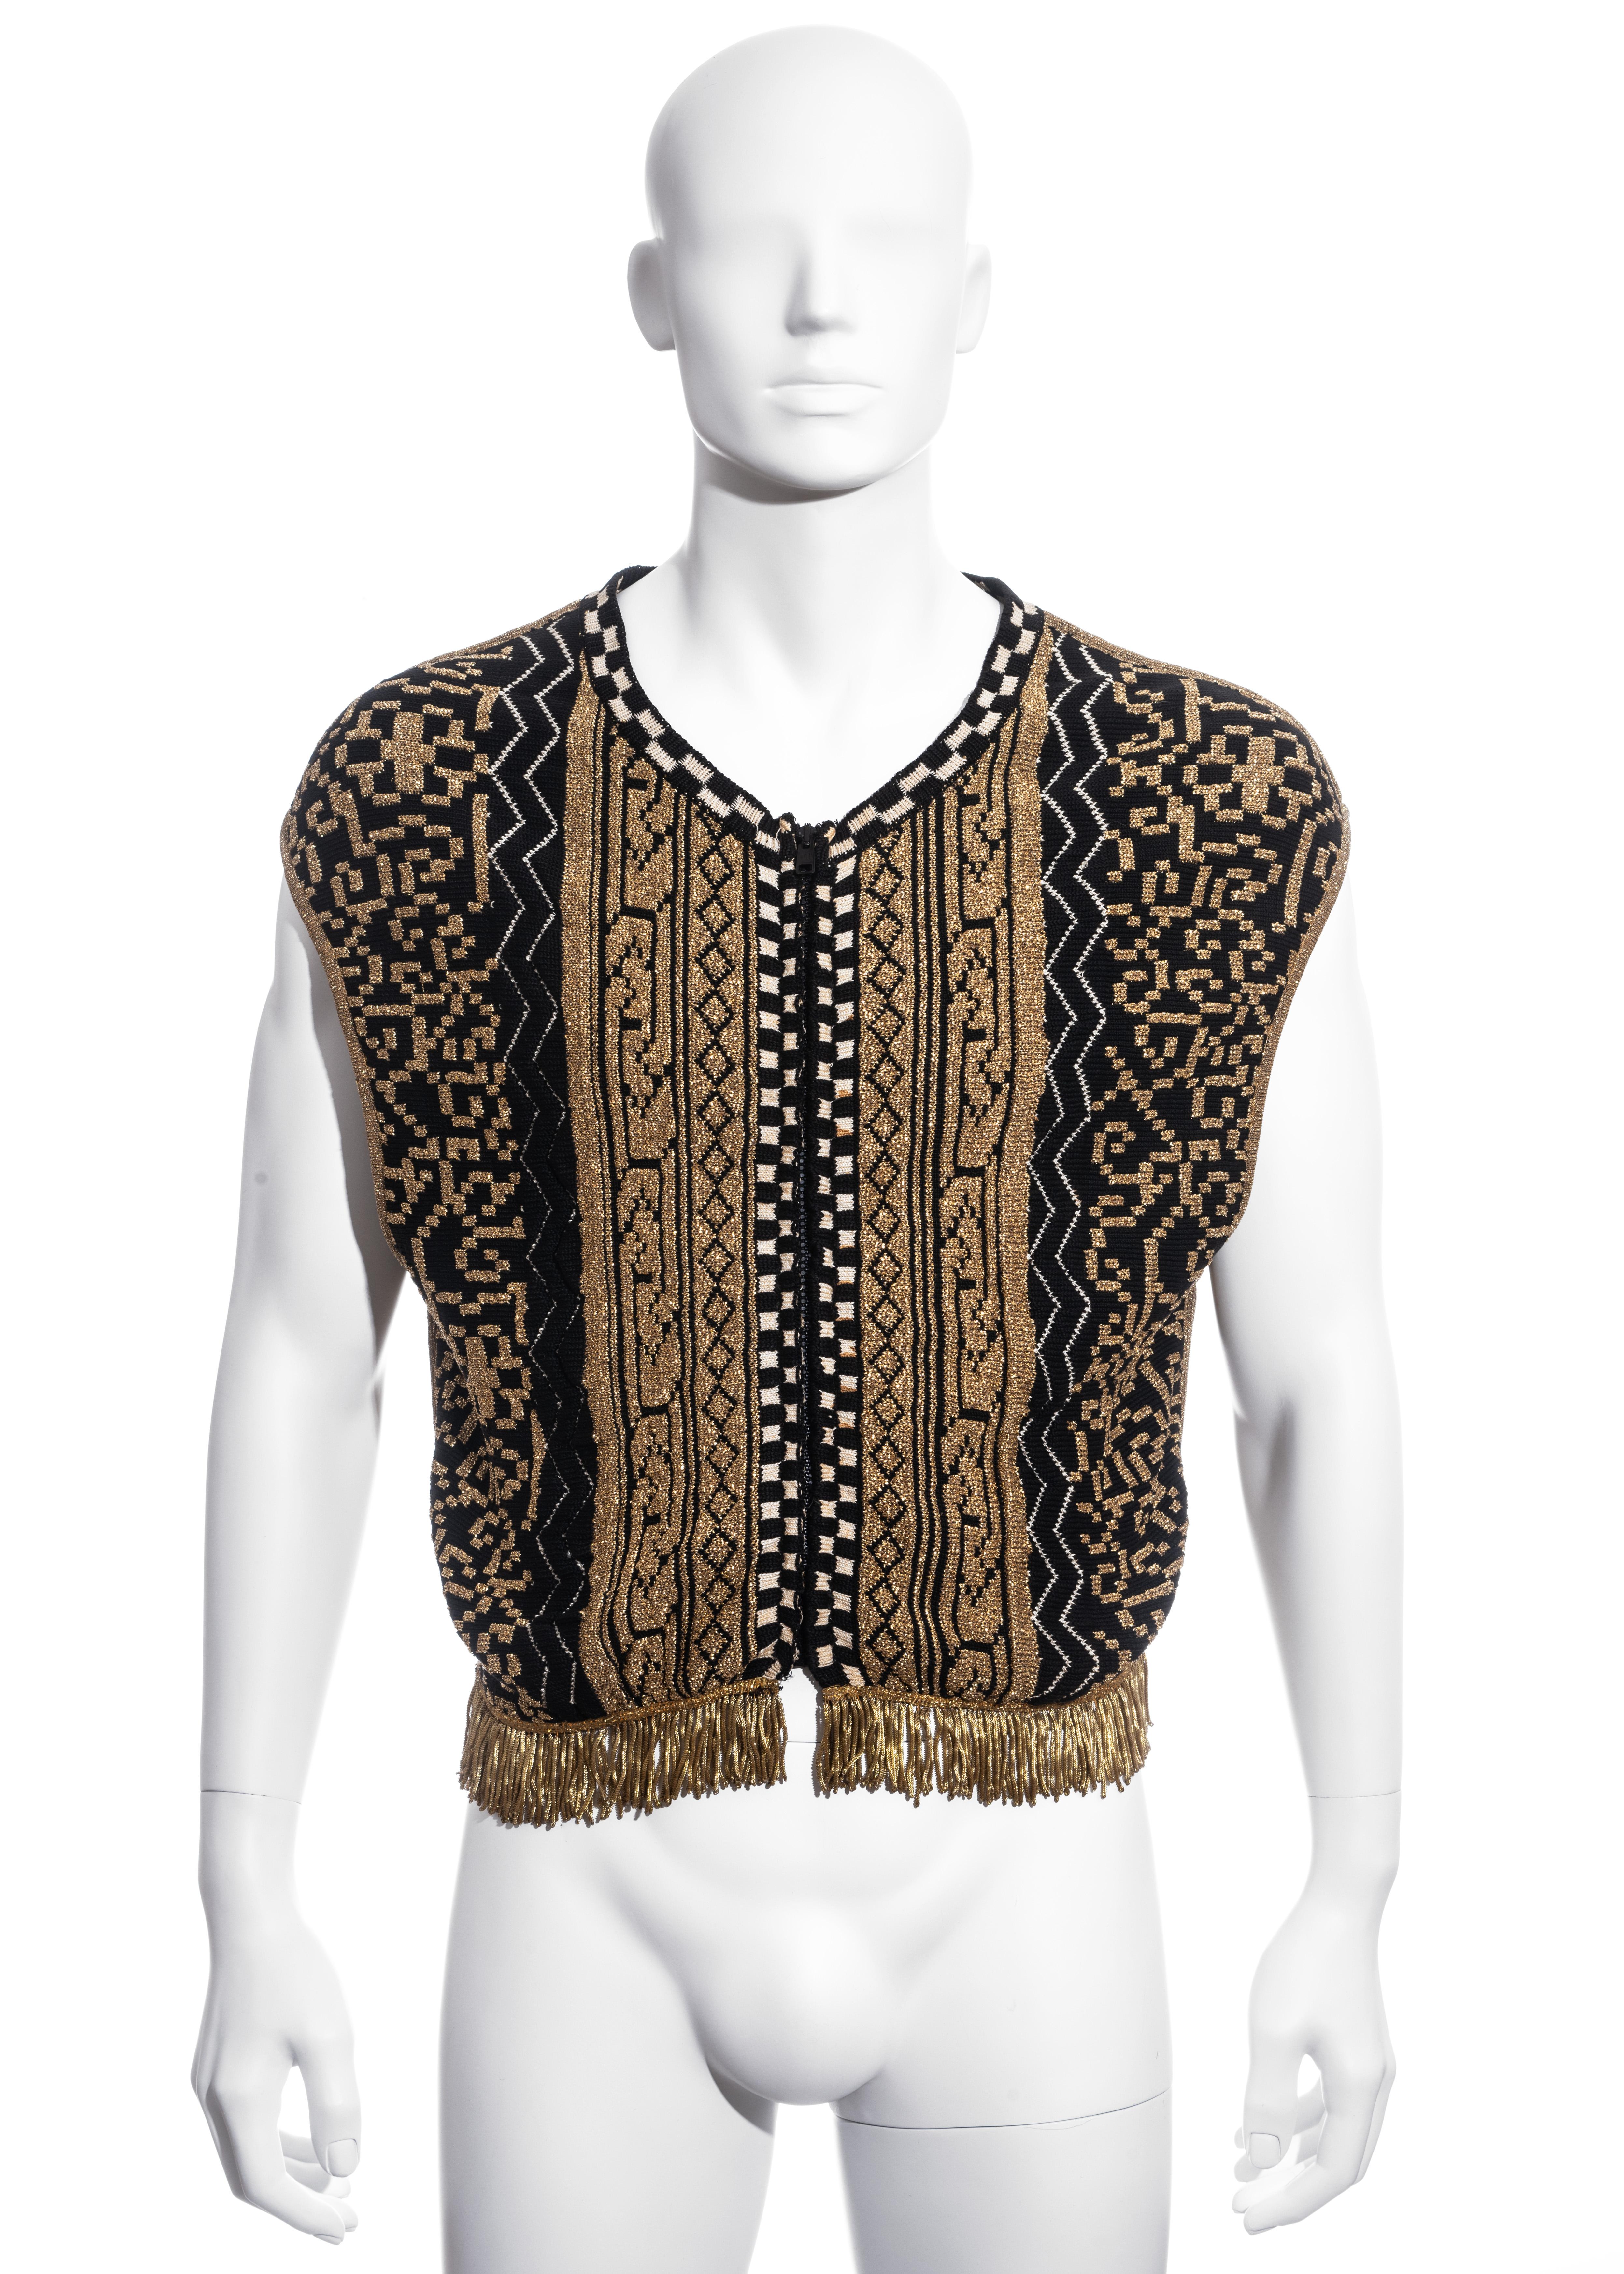 ▪ Men's Jean Paul Gaultier zip-up vest
▪ Metallic gold and black Lurex knit 
▪ 55% Cotton, 21% Polyester, 19% Nylon, 5% Elastane  
▪ Fringed hem
▪ Size 48
▪ Fall-Winter 1985
